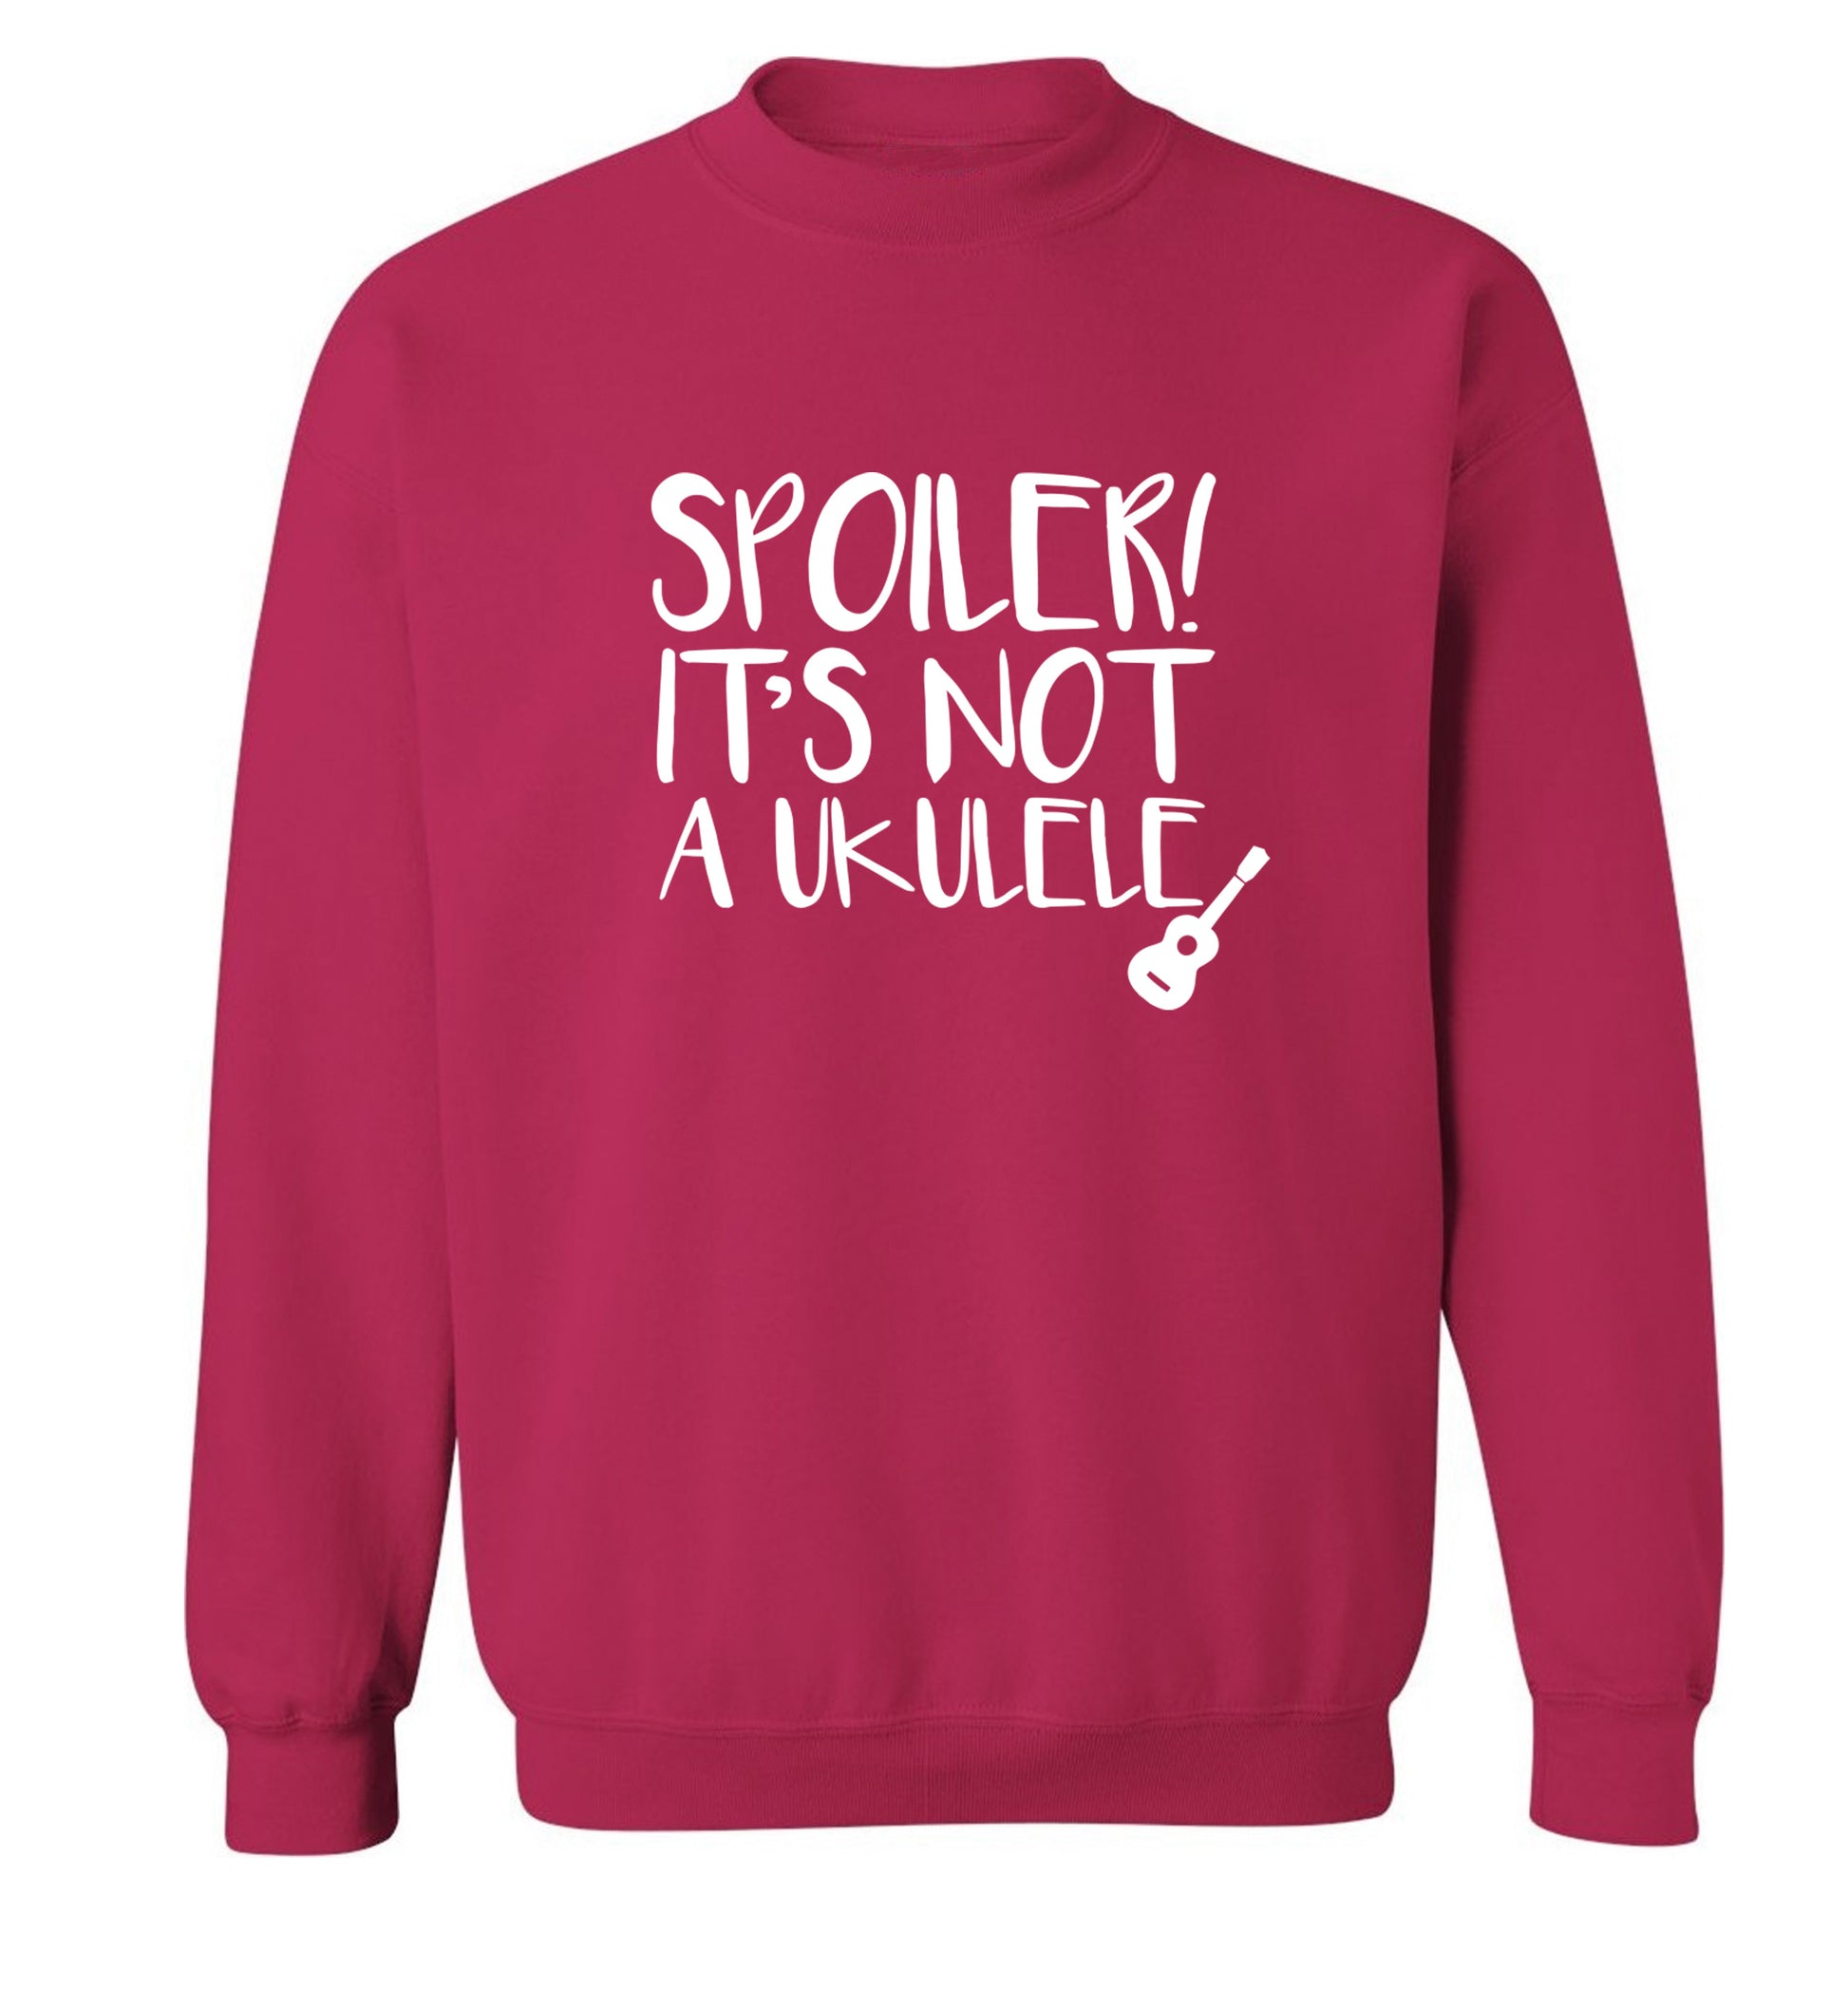 Spoiler it's not a ukulele Adult's unisex pink Sweater 2XL